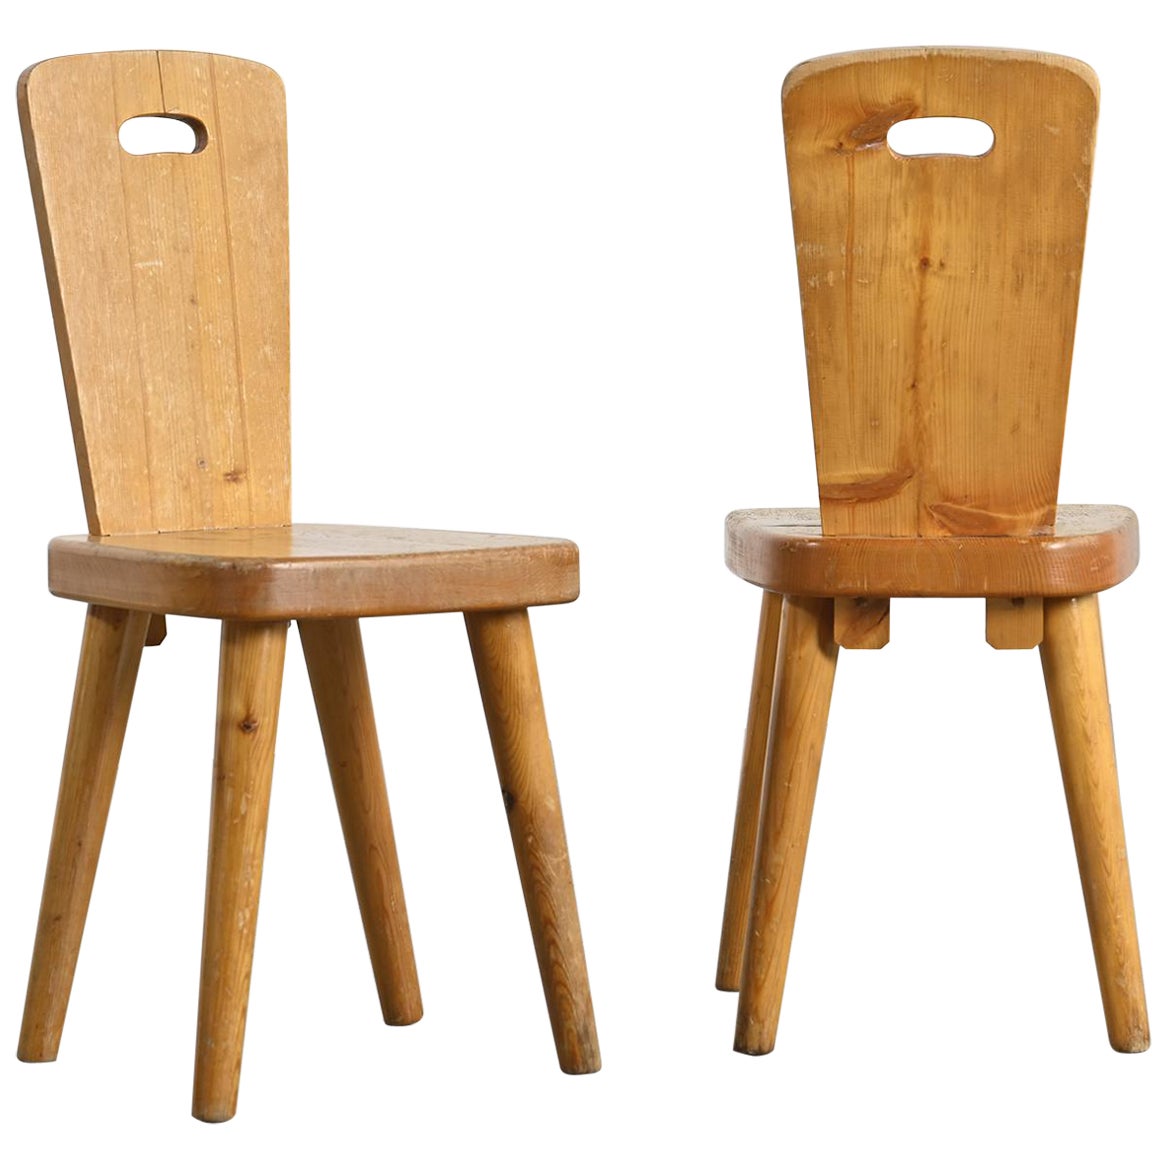 Pair of Chairs by Christian Durupt, Meribel 1960